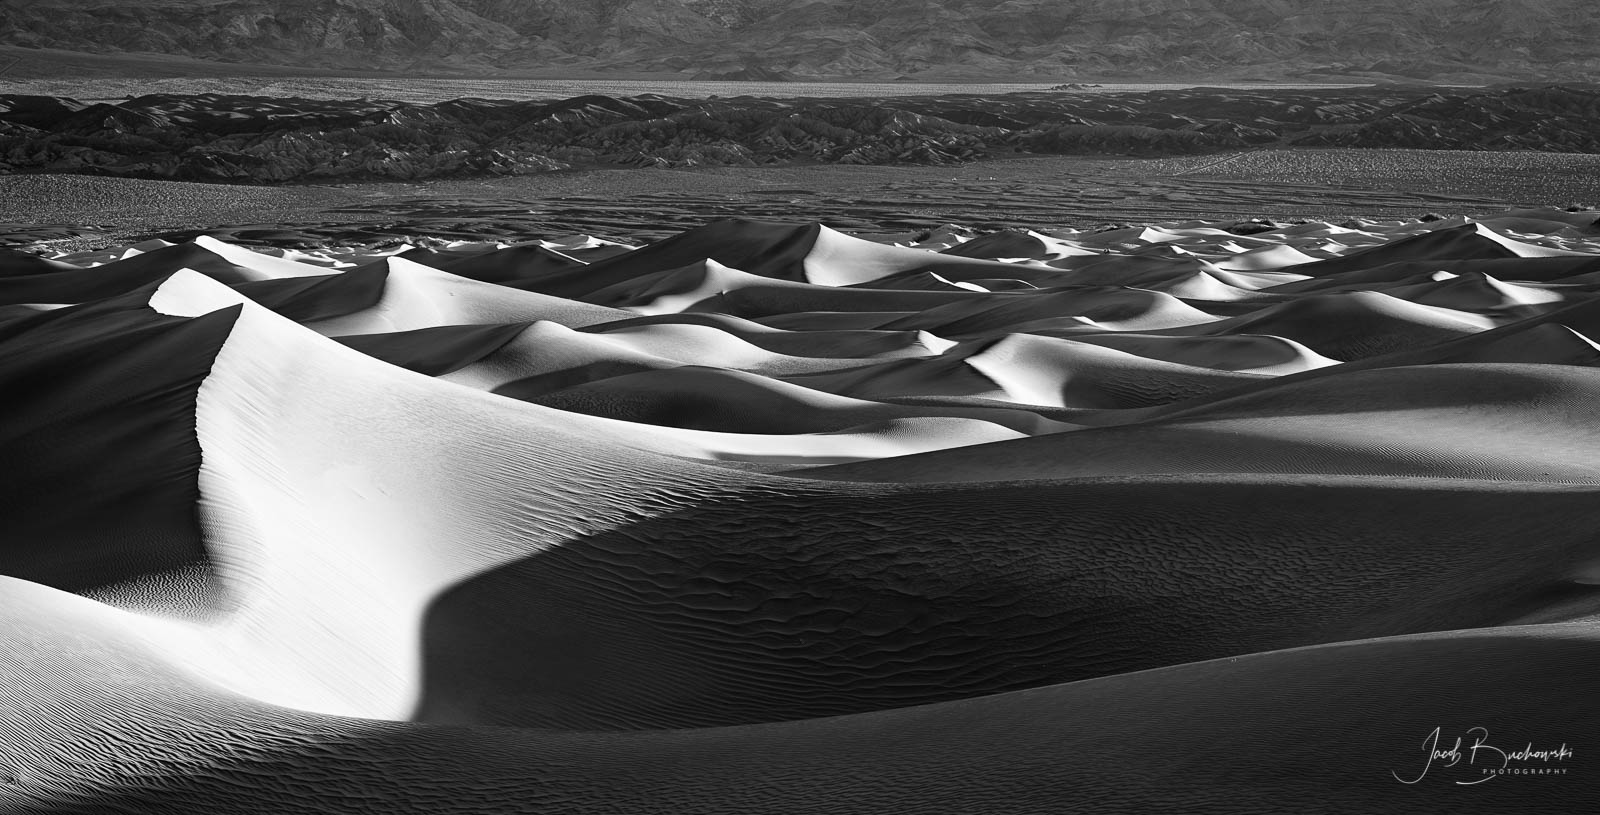 Death Valley National Park, Death Valley, California